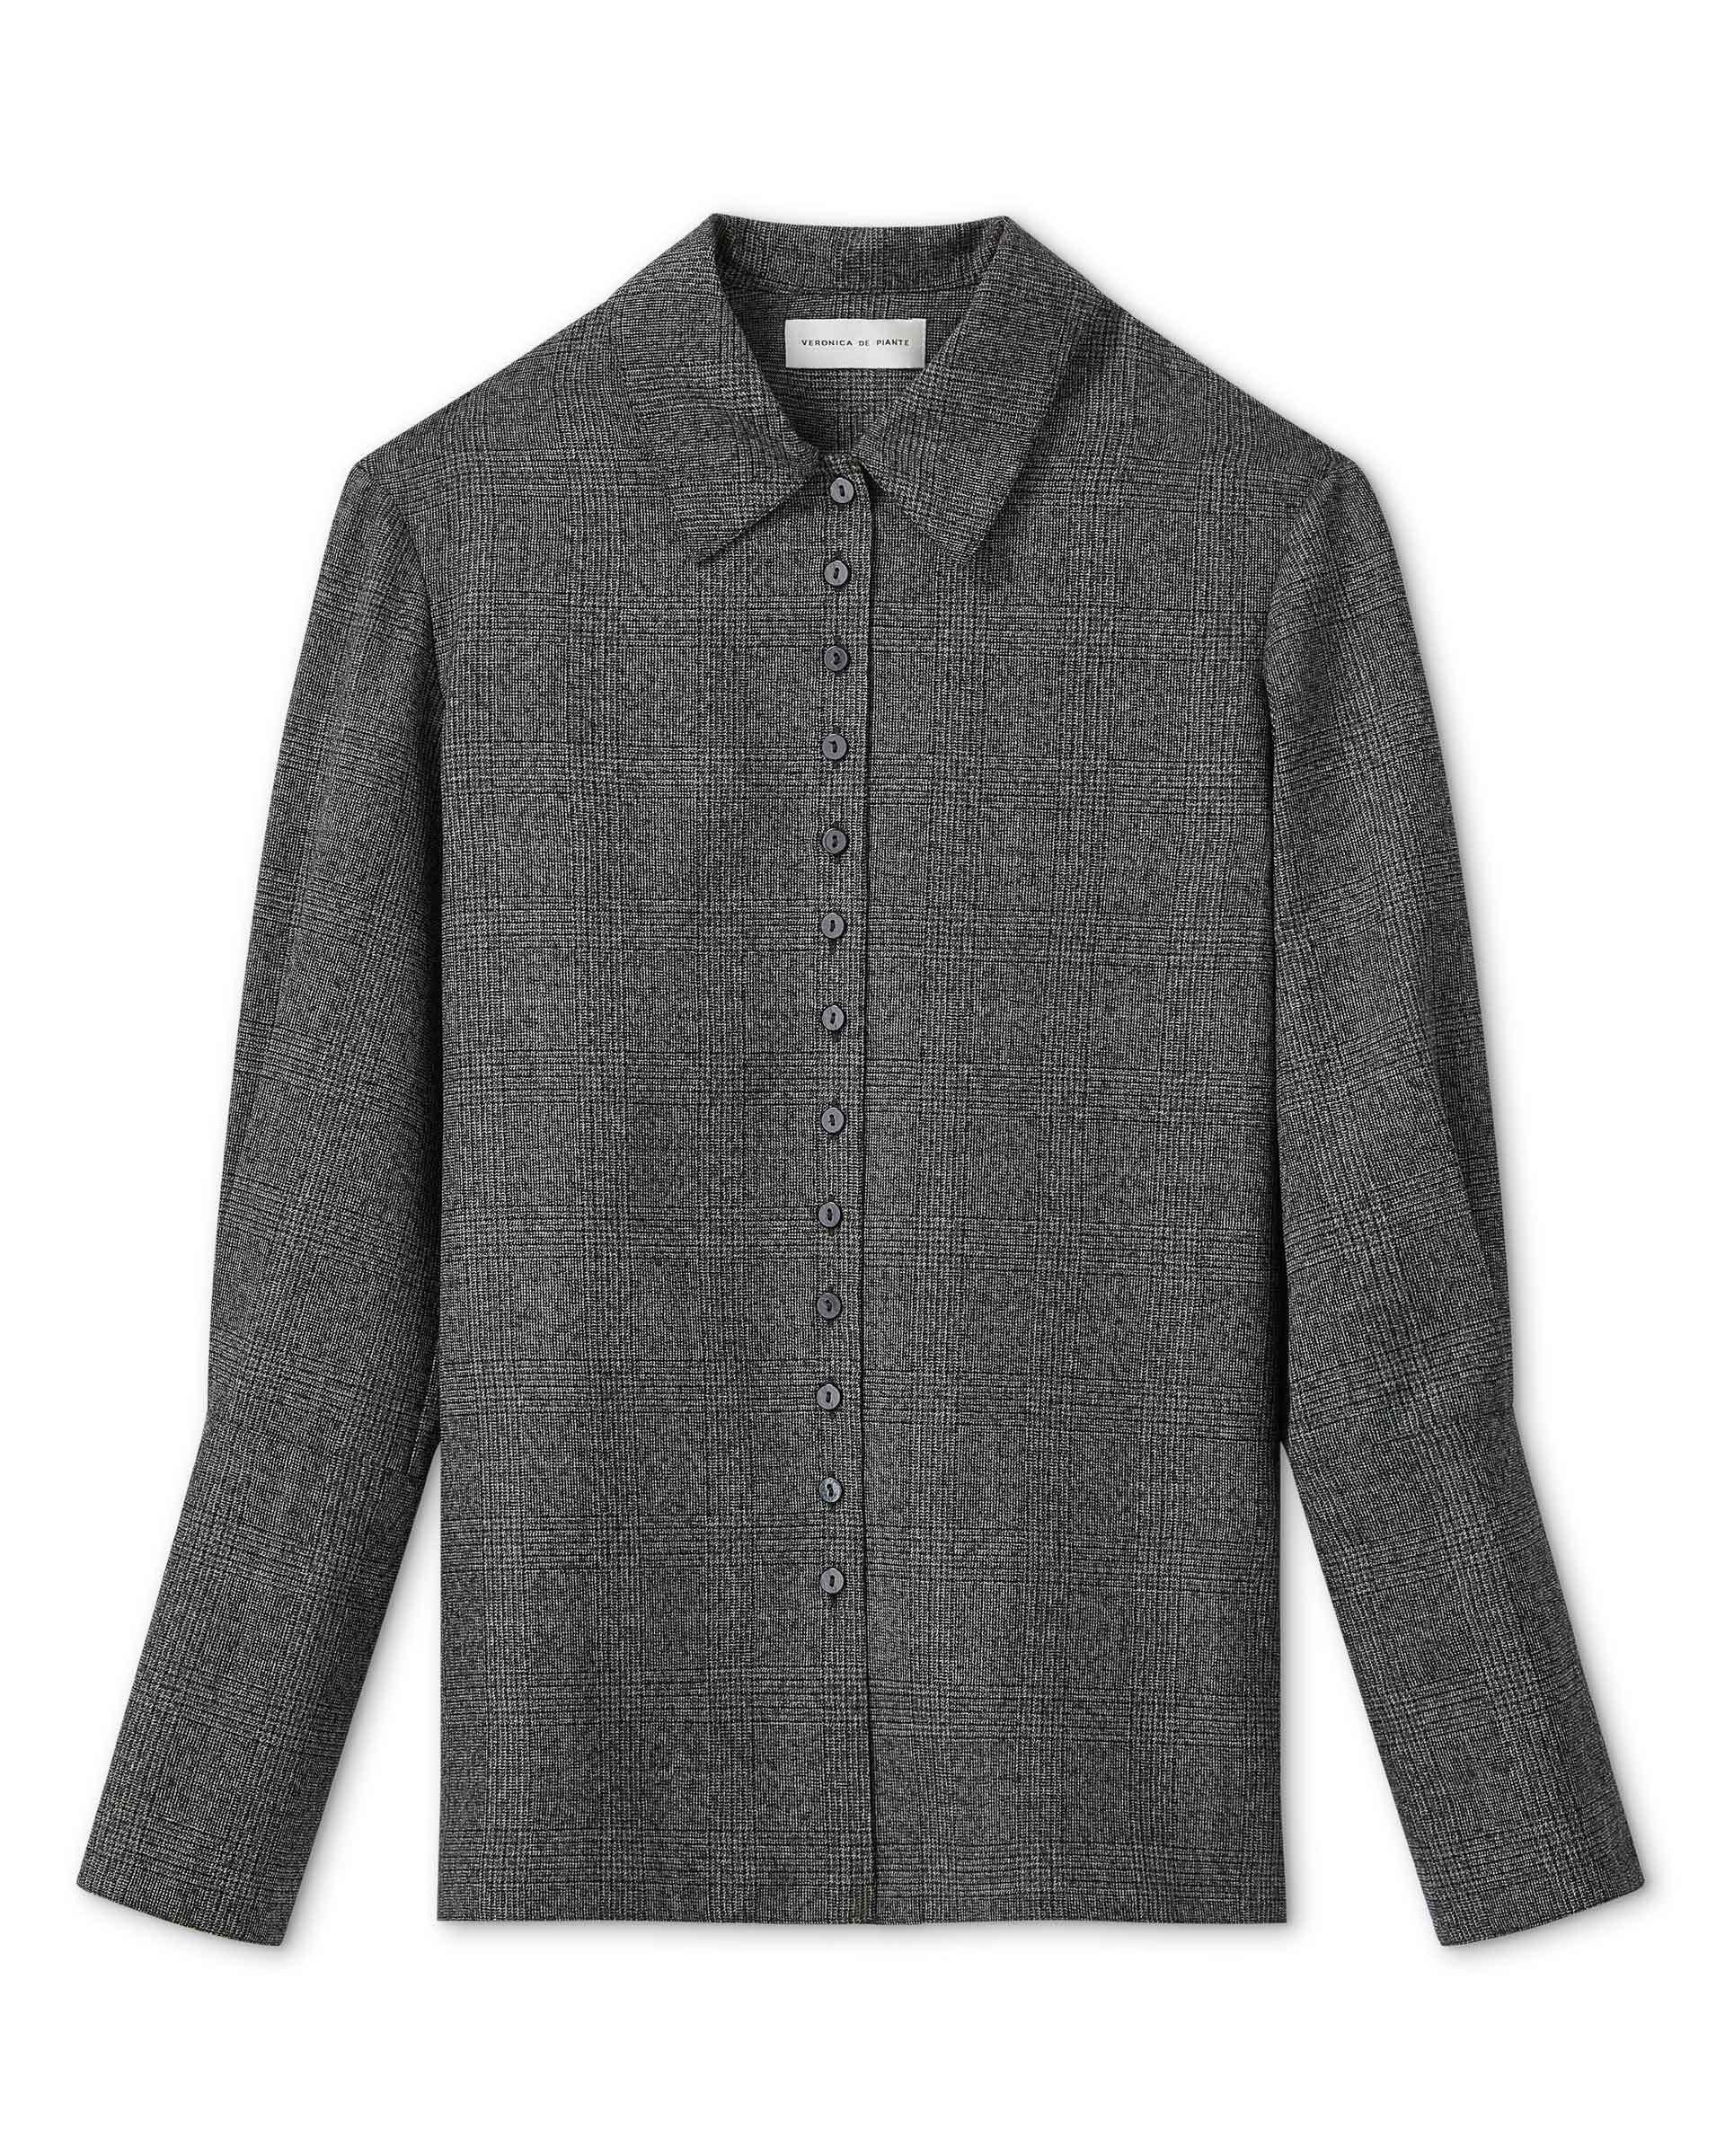 Camisa de lana de cuadros grises de Veronica de Piante (980 euros).